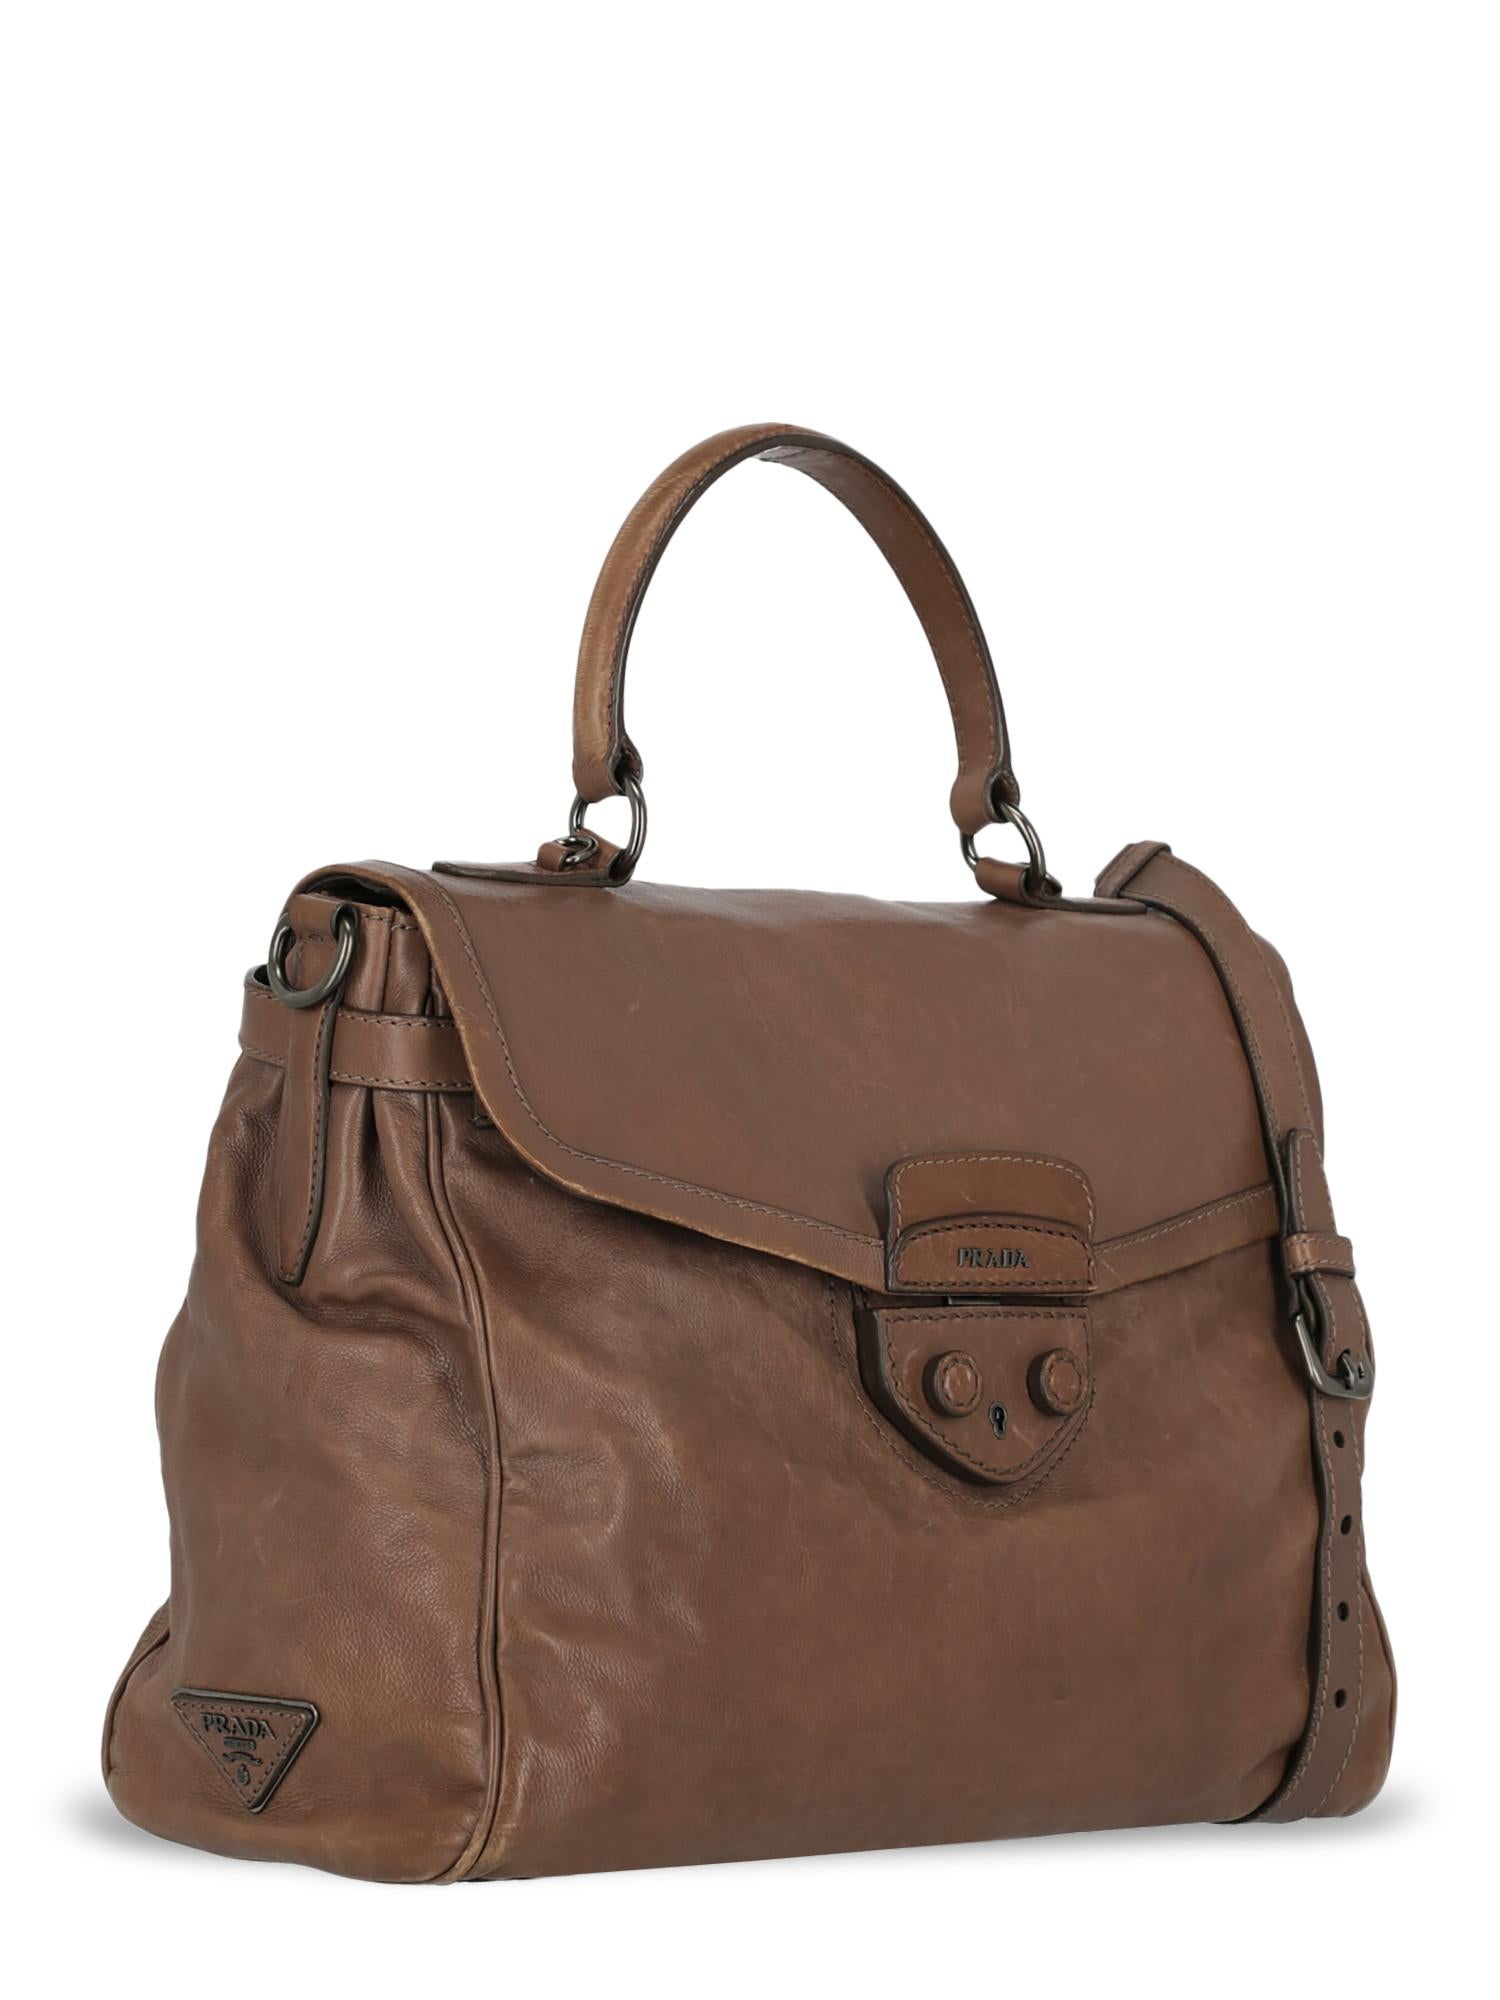 Prada Woman Handbag Brown  In Fair Condition For Sale In Milan, IT